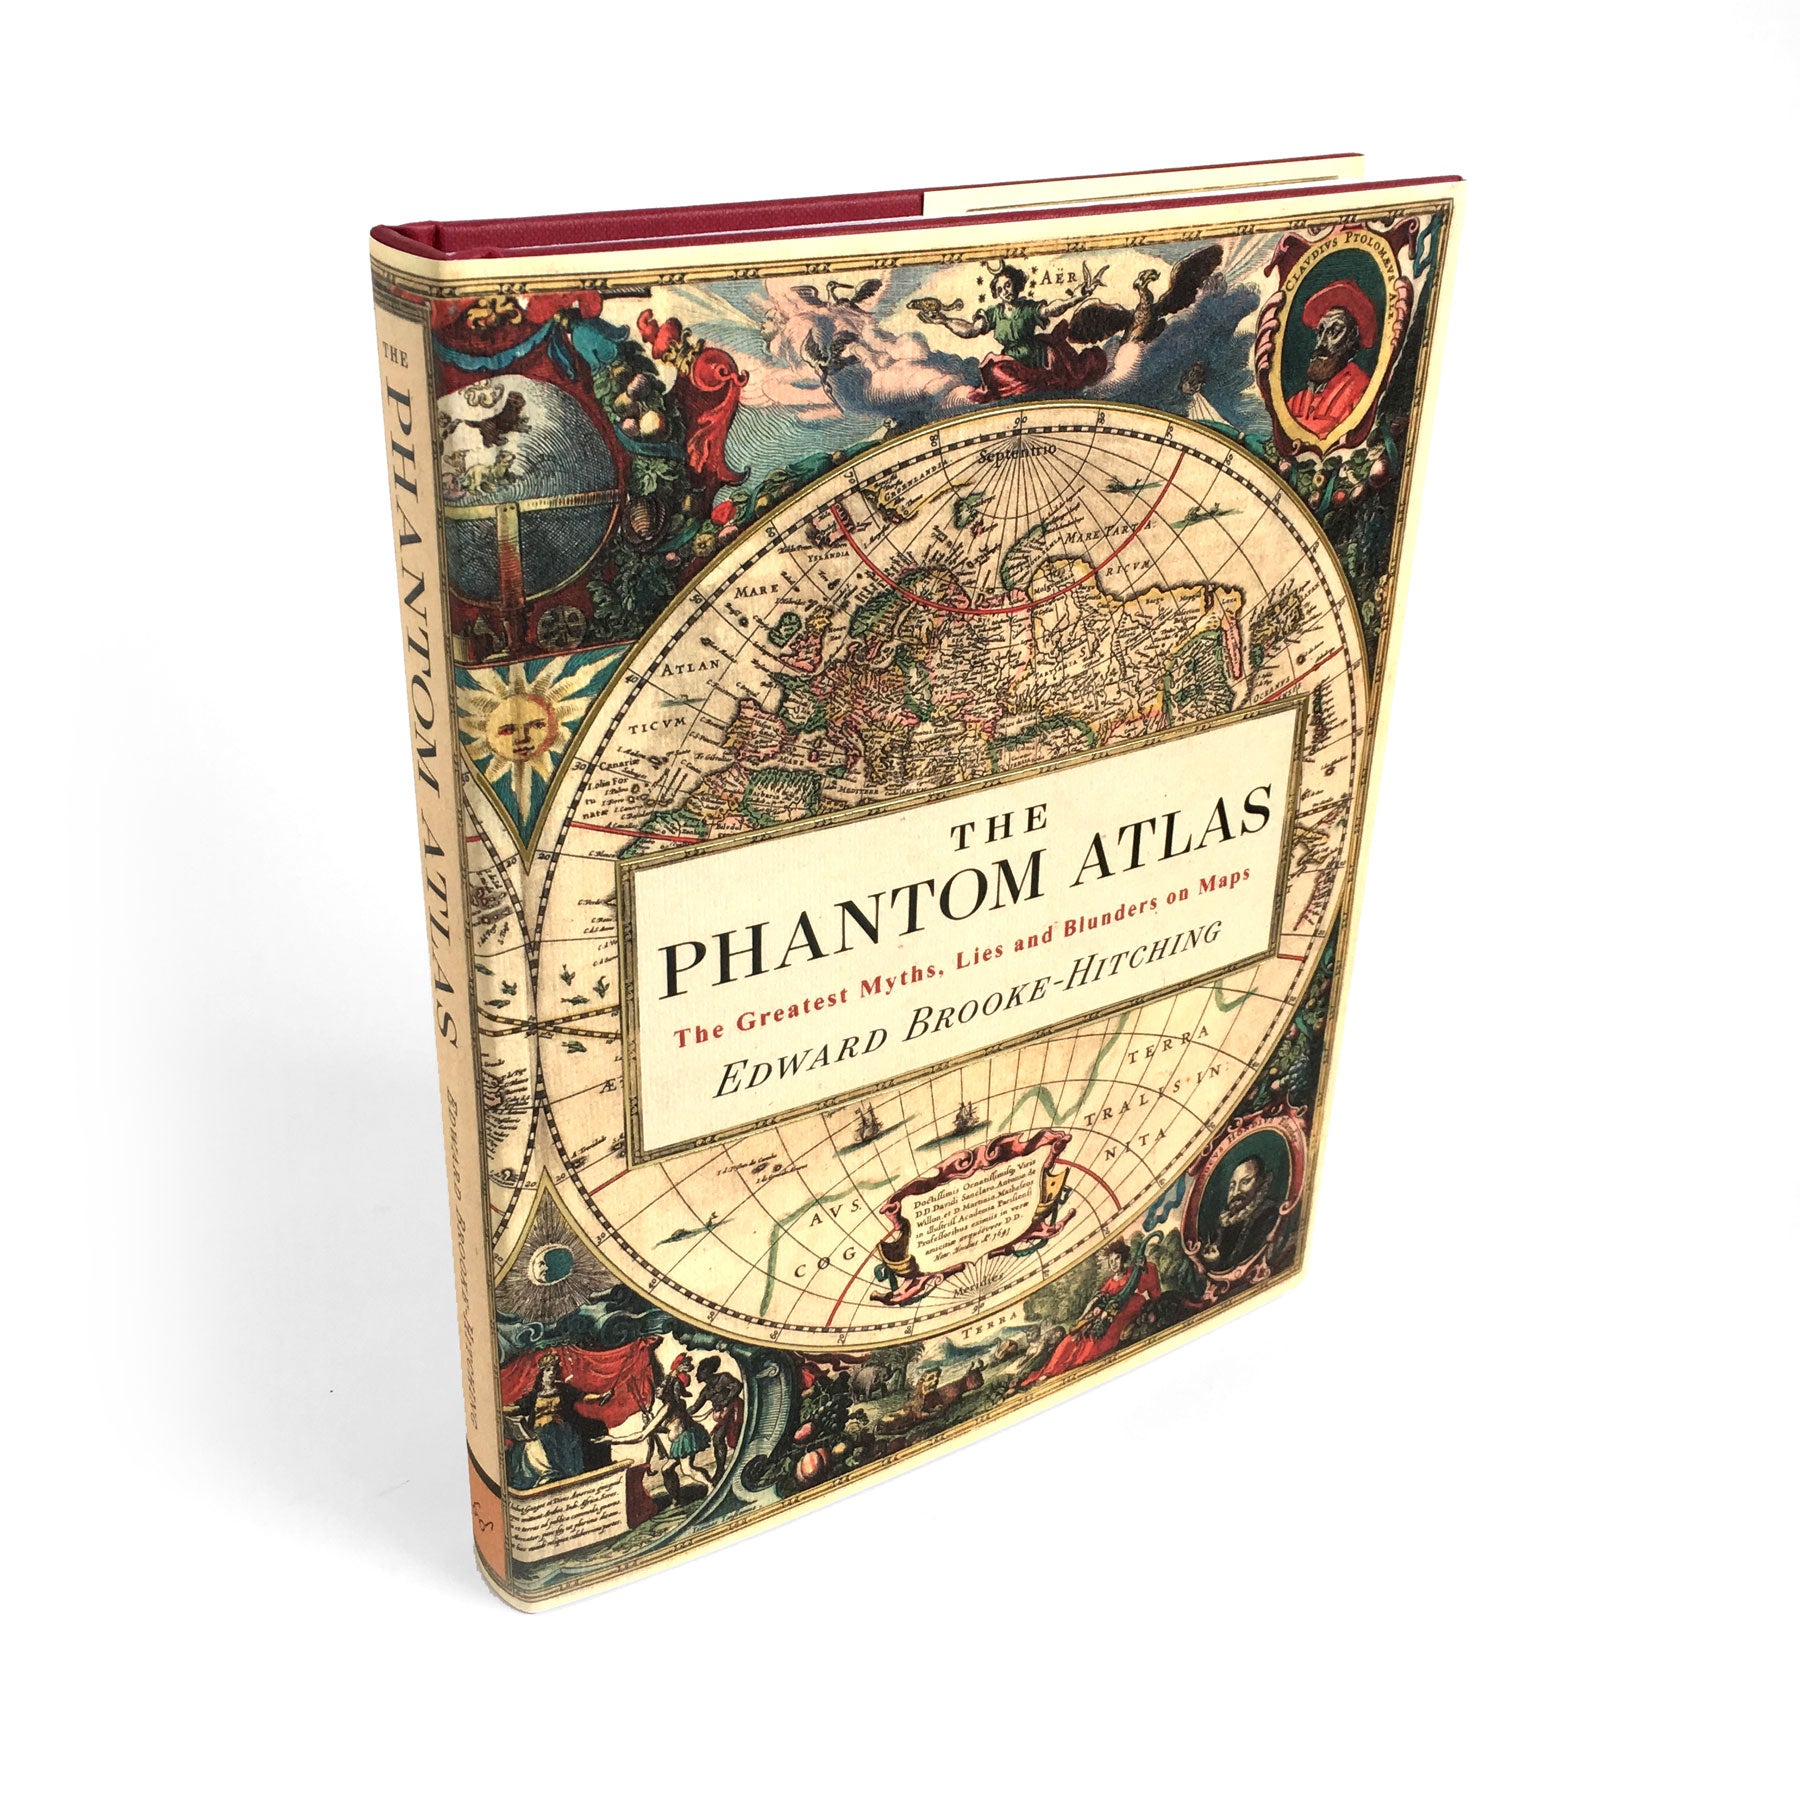 The Phantom Atlas